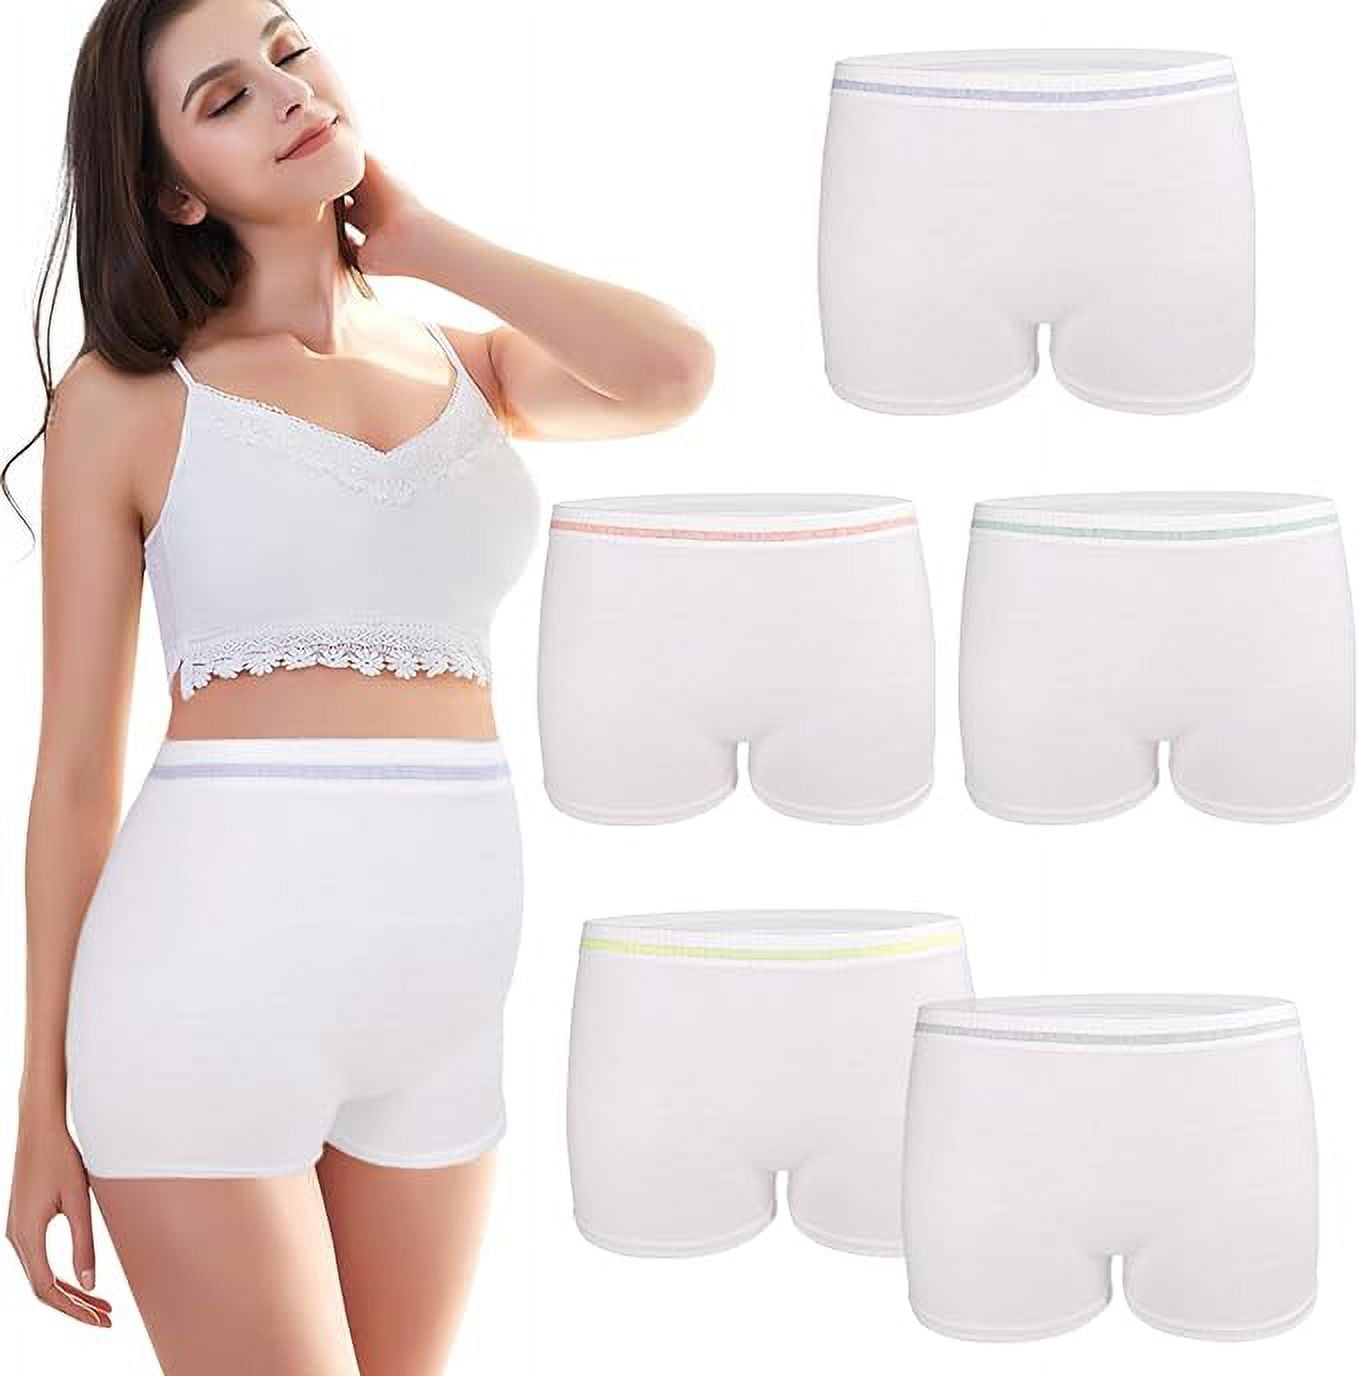 Healthy Studio Mesh Underwear Postpartum 5 Count Disposable